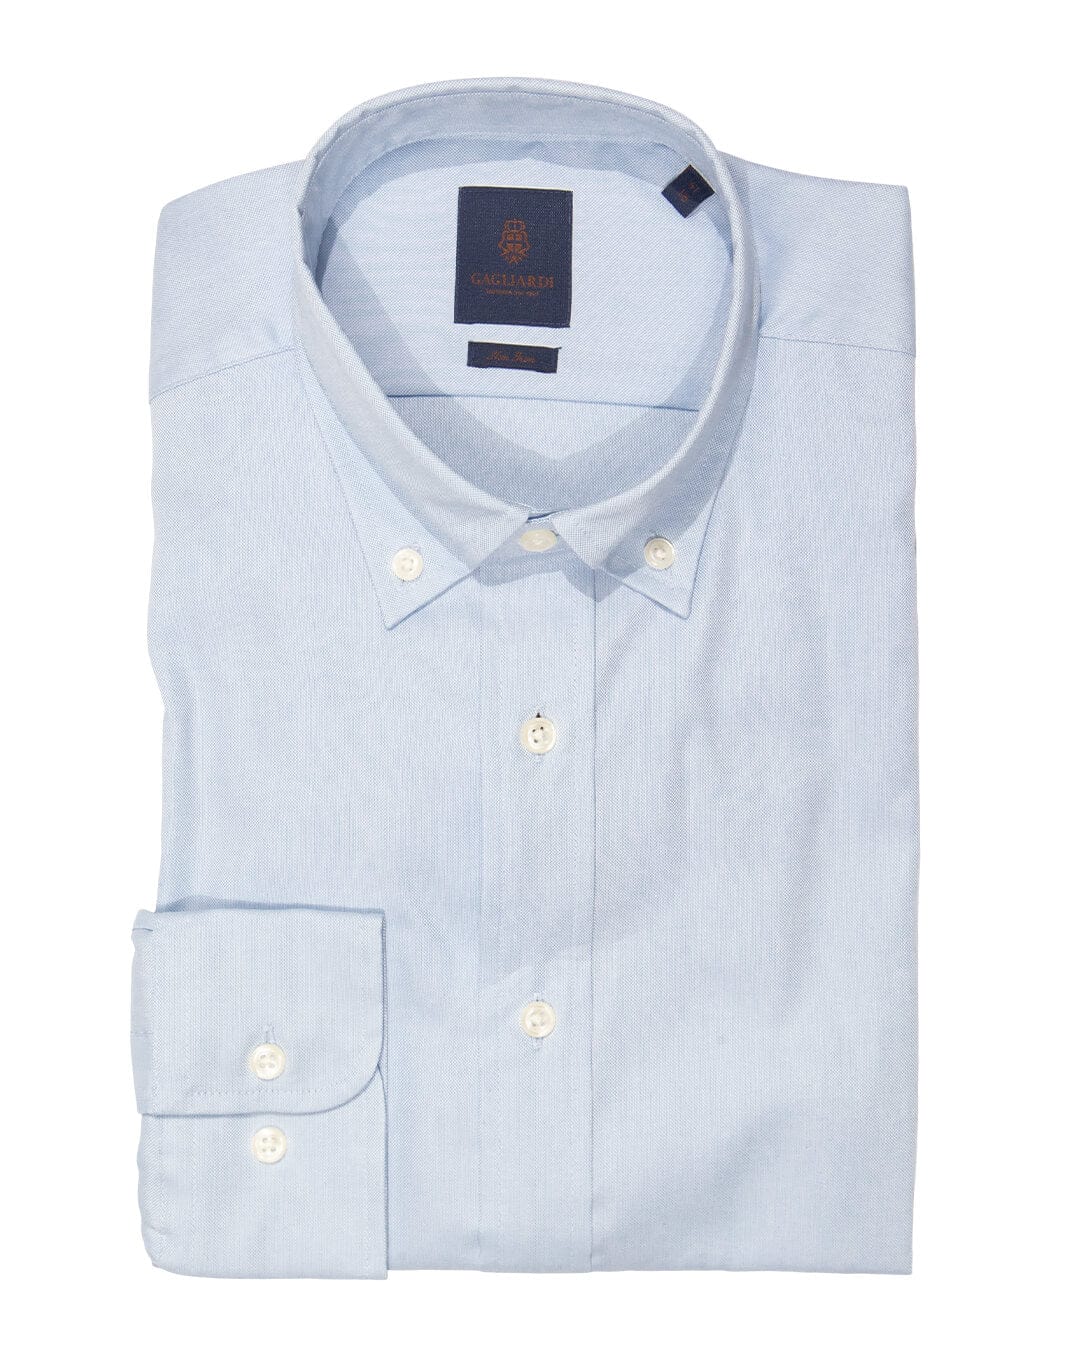 Gagliardi Shirts Gagliardi Sky Oxford Button-Down Non-Iron Shirt